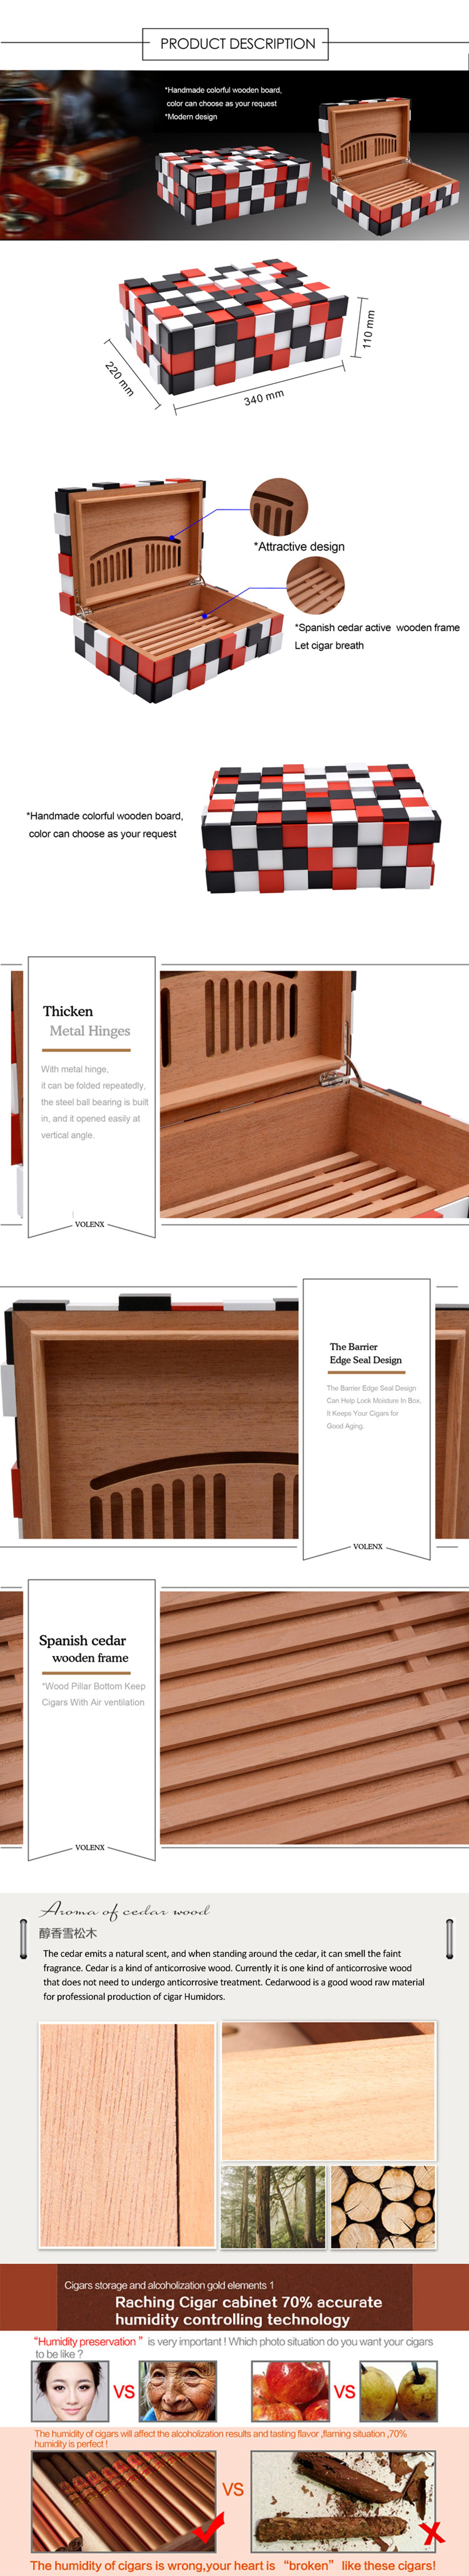 Unique Design High-end spanish cedar  tray wooden cigar humidor box